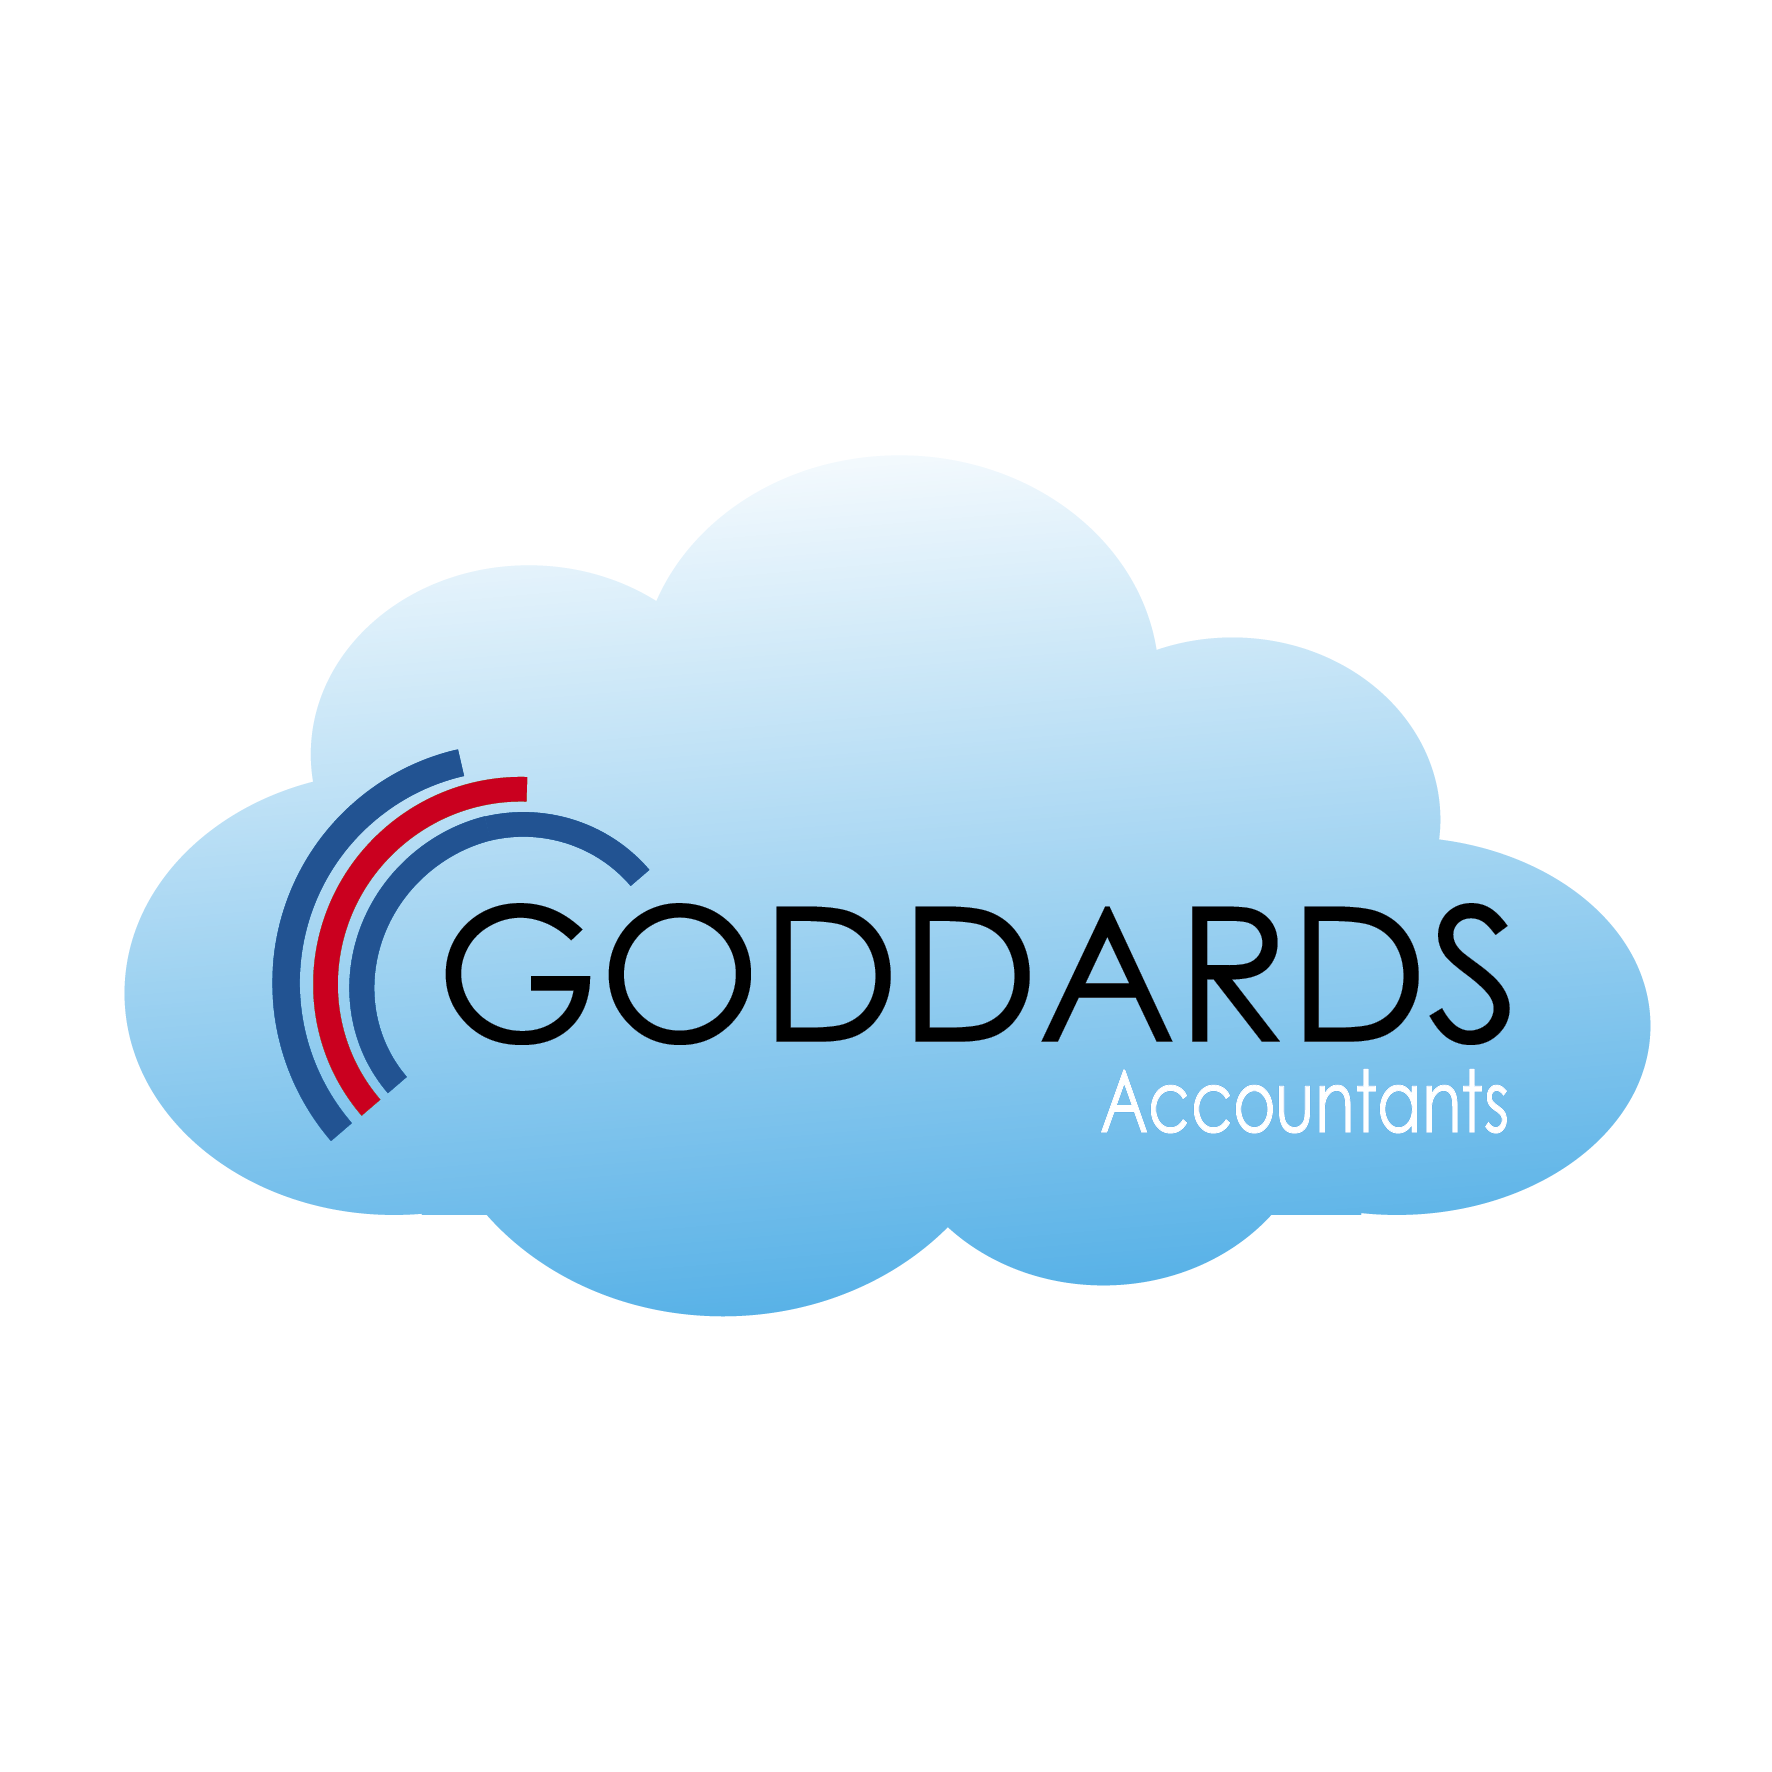 Goddards Accountants